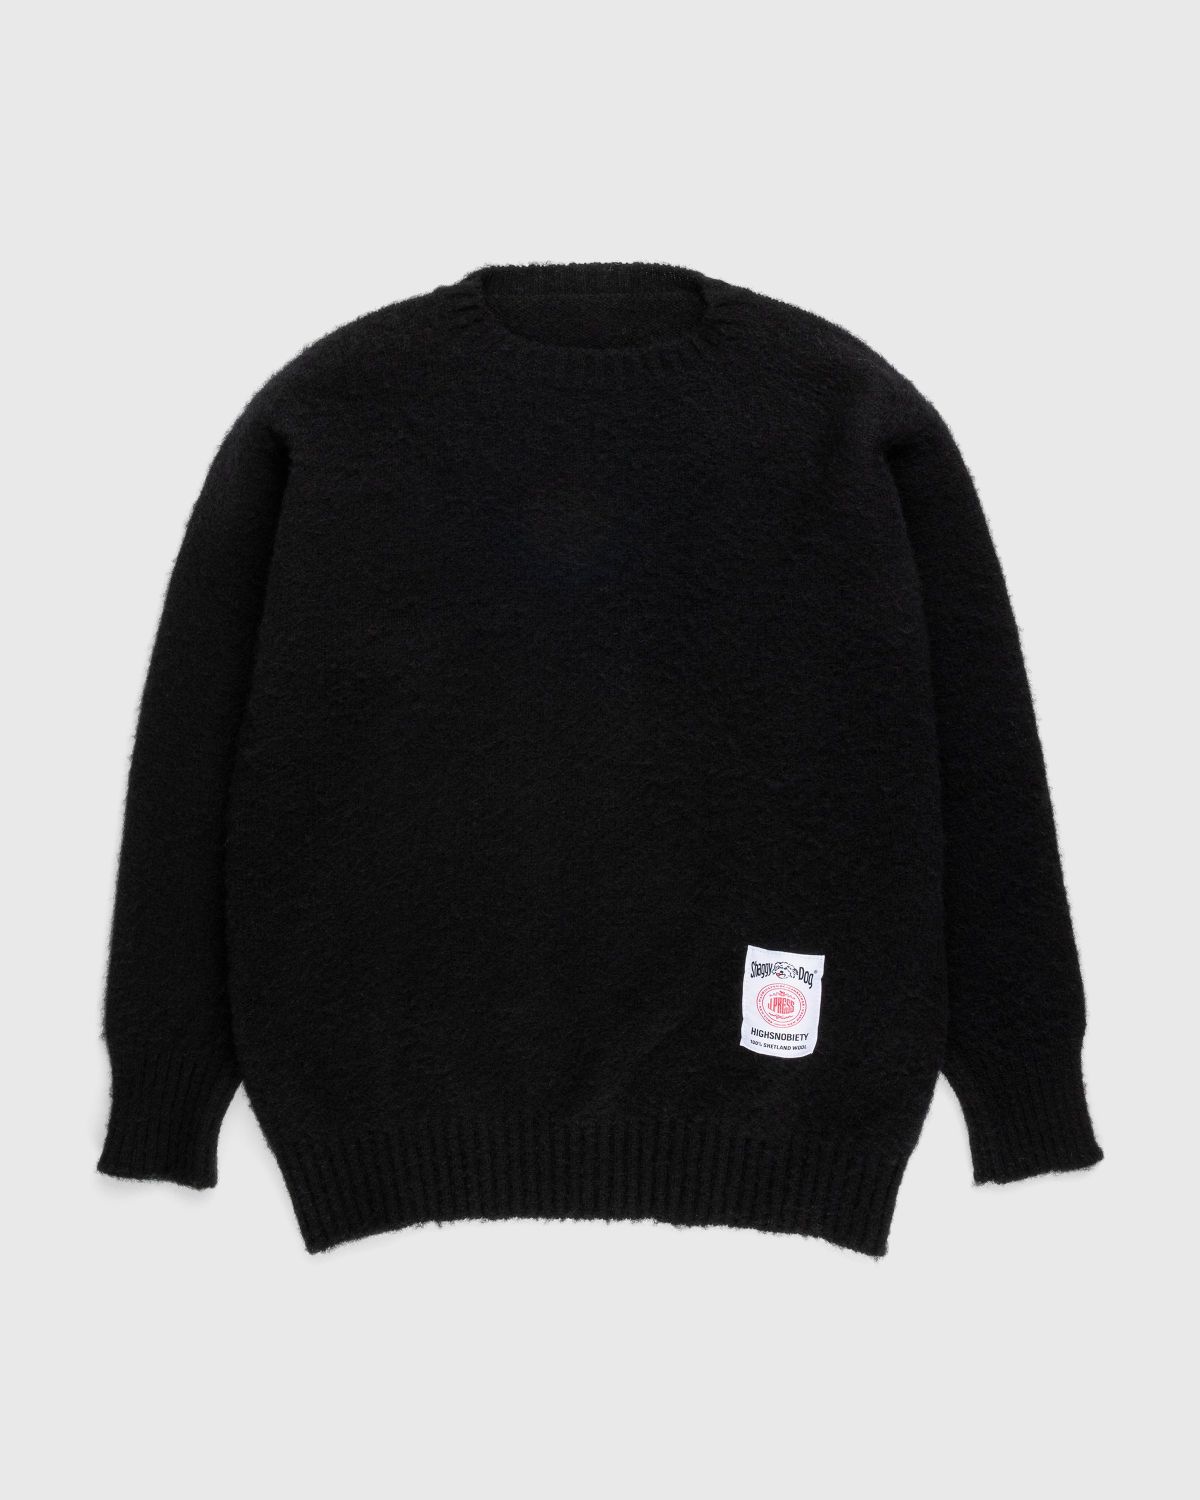 J. Press x Highsnobiety – Shaggy Dog Solid Sweater Black - Crewnecks - Black - Image 1